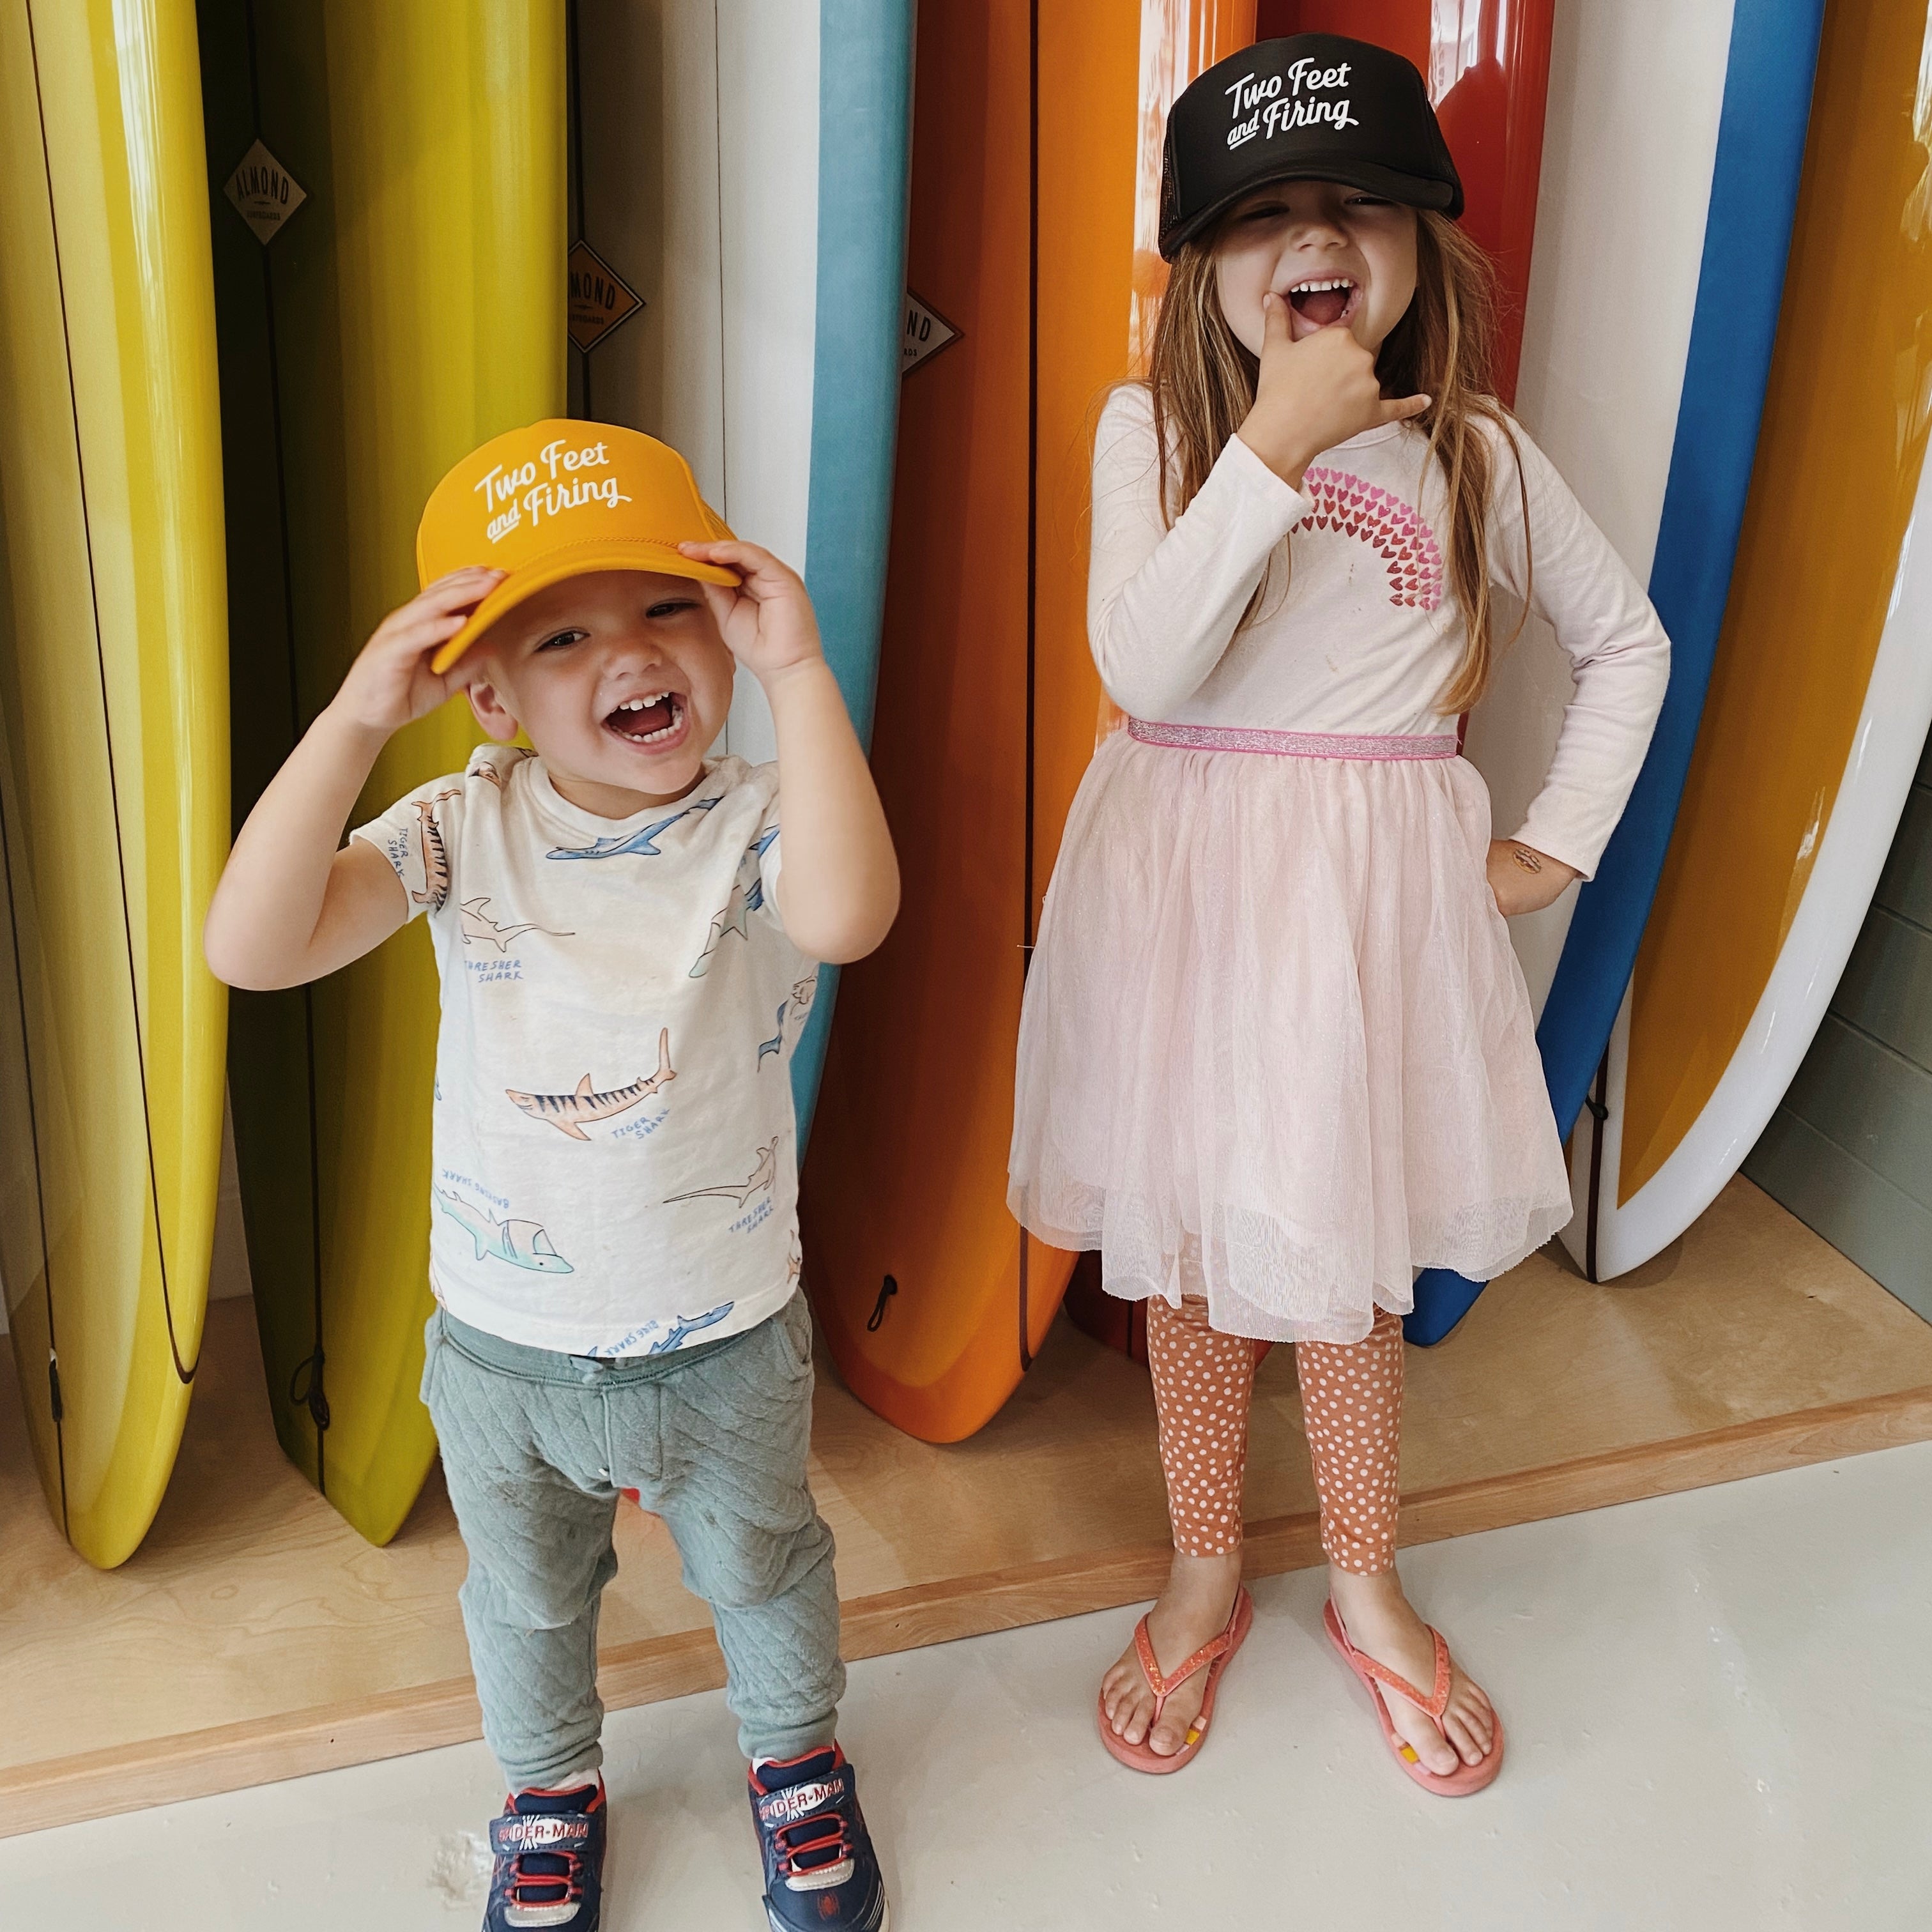 Two Feet & Firing | Kids Hat